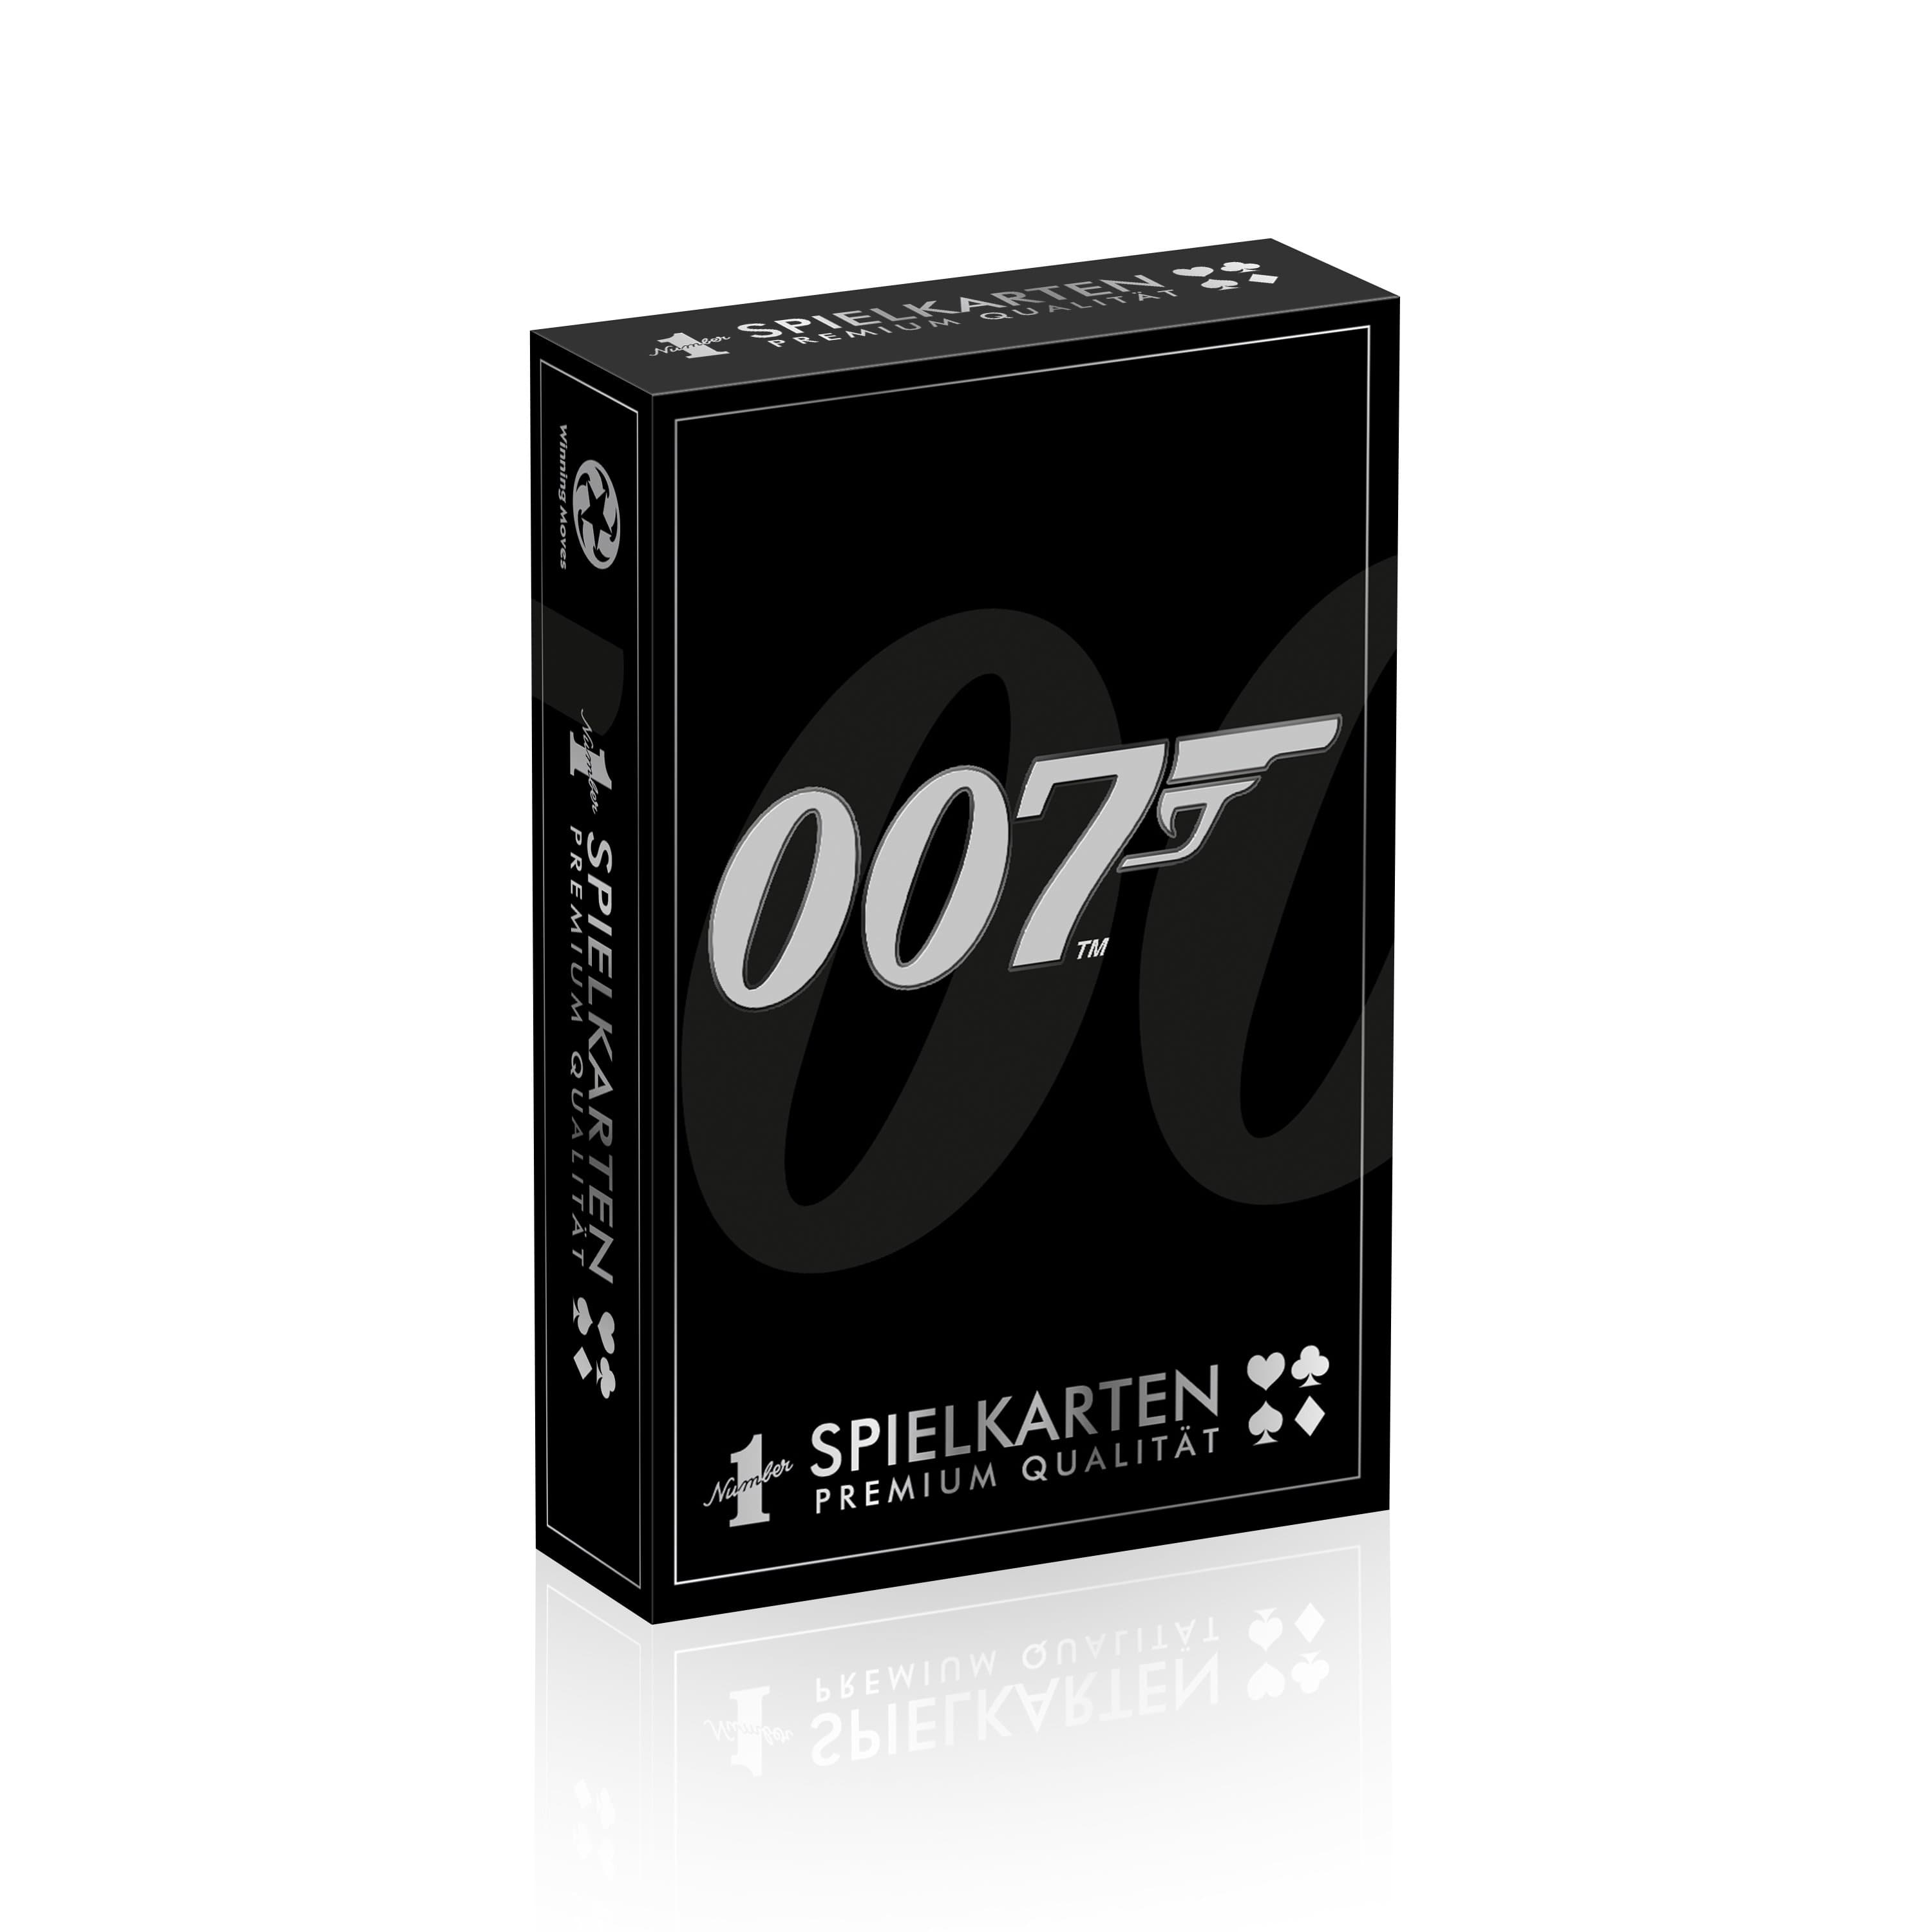 James Bond 007 Playing Cards